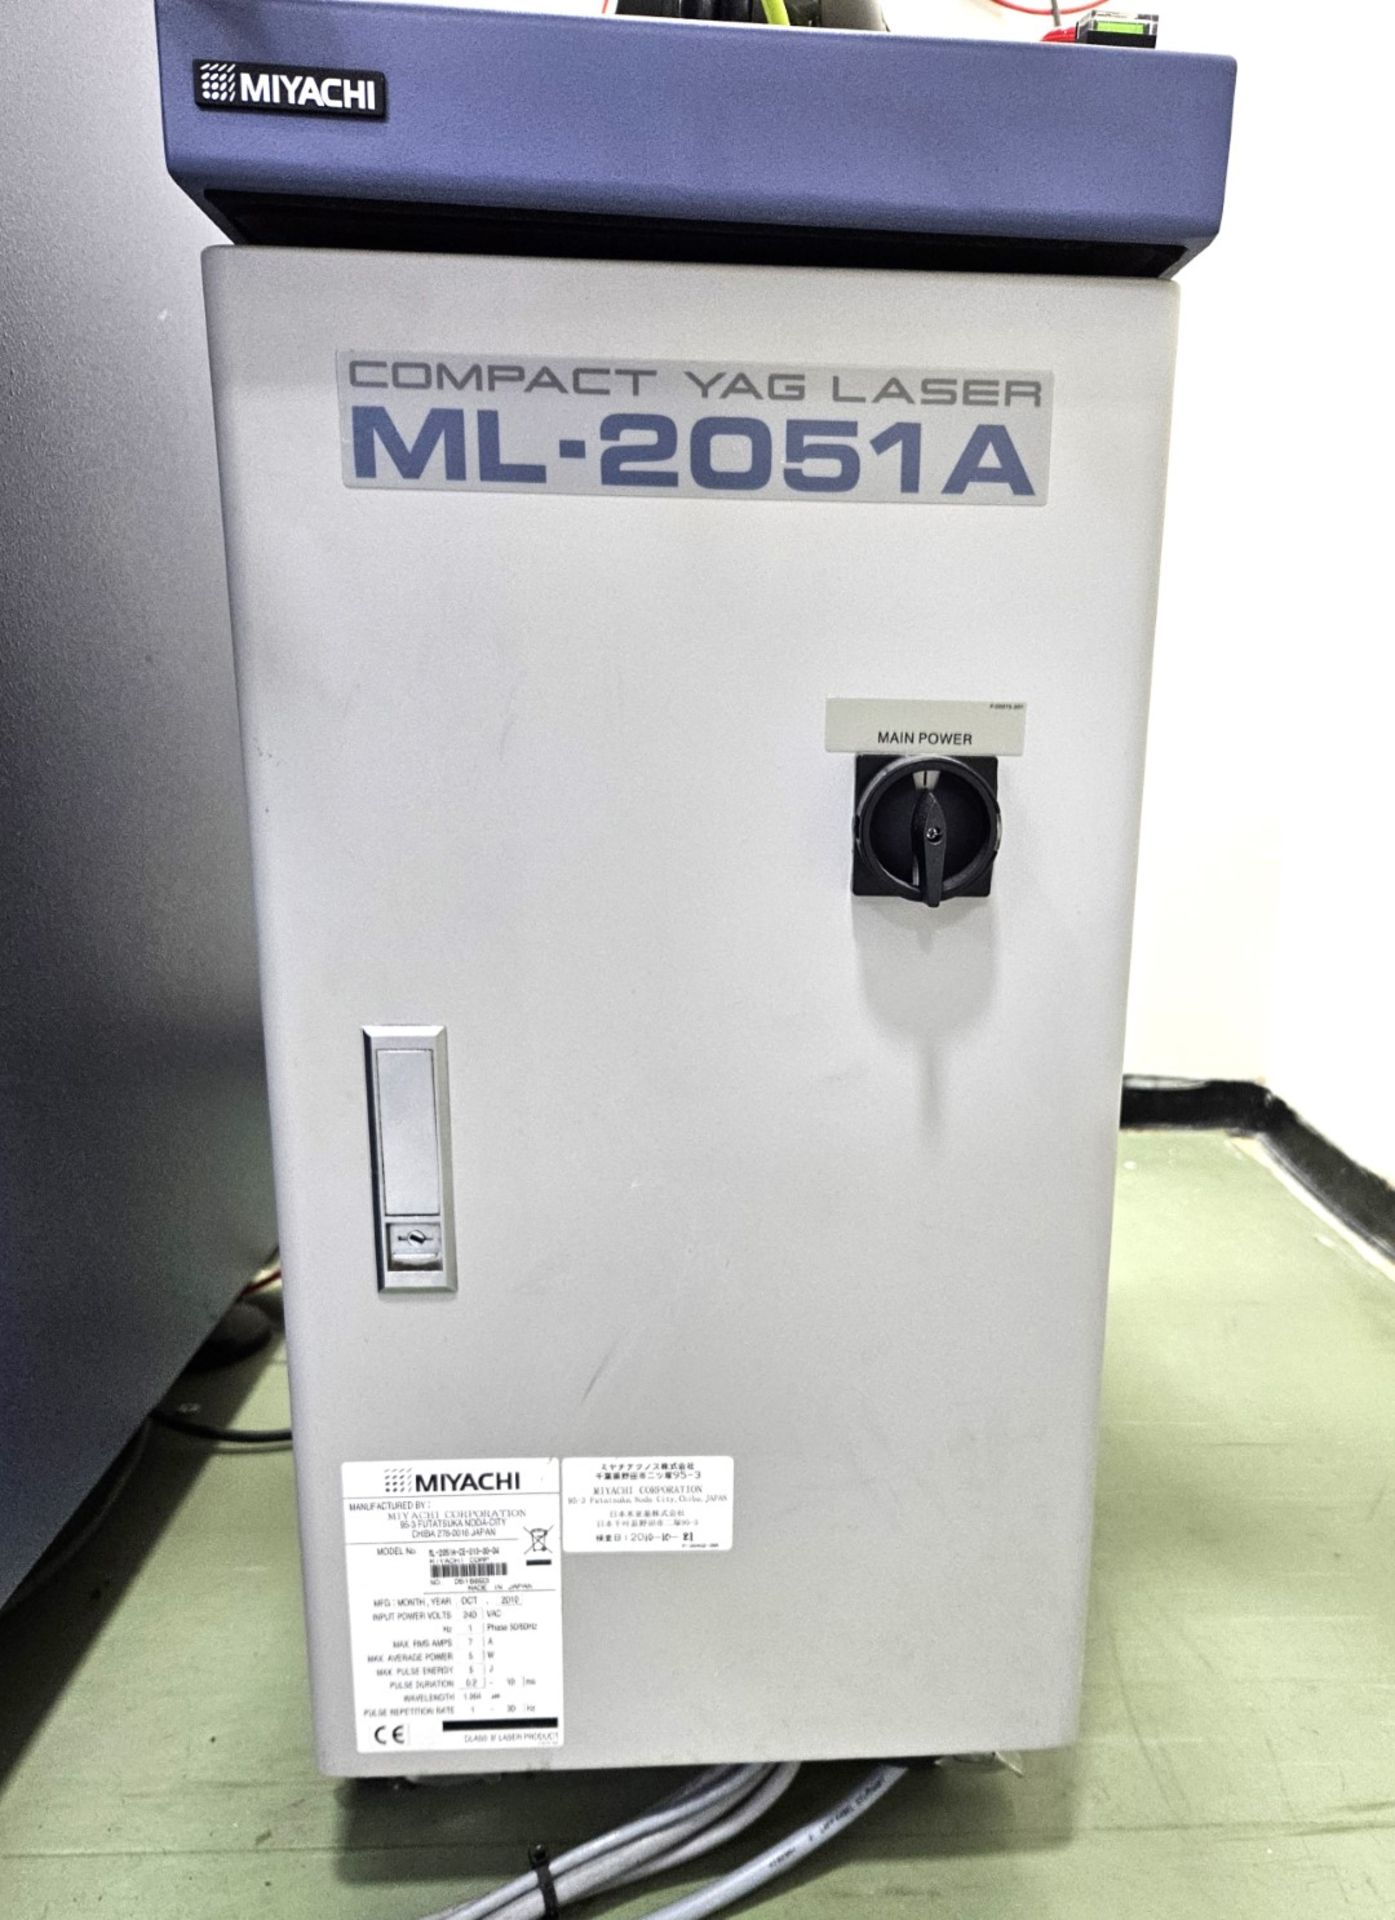 1 x Amada Miyachi Nova 6 Laser CNC Welding Workstation System With ML-2051A Compact Yag Laser - - Image 11 of 11